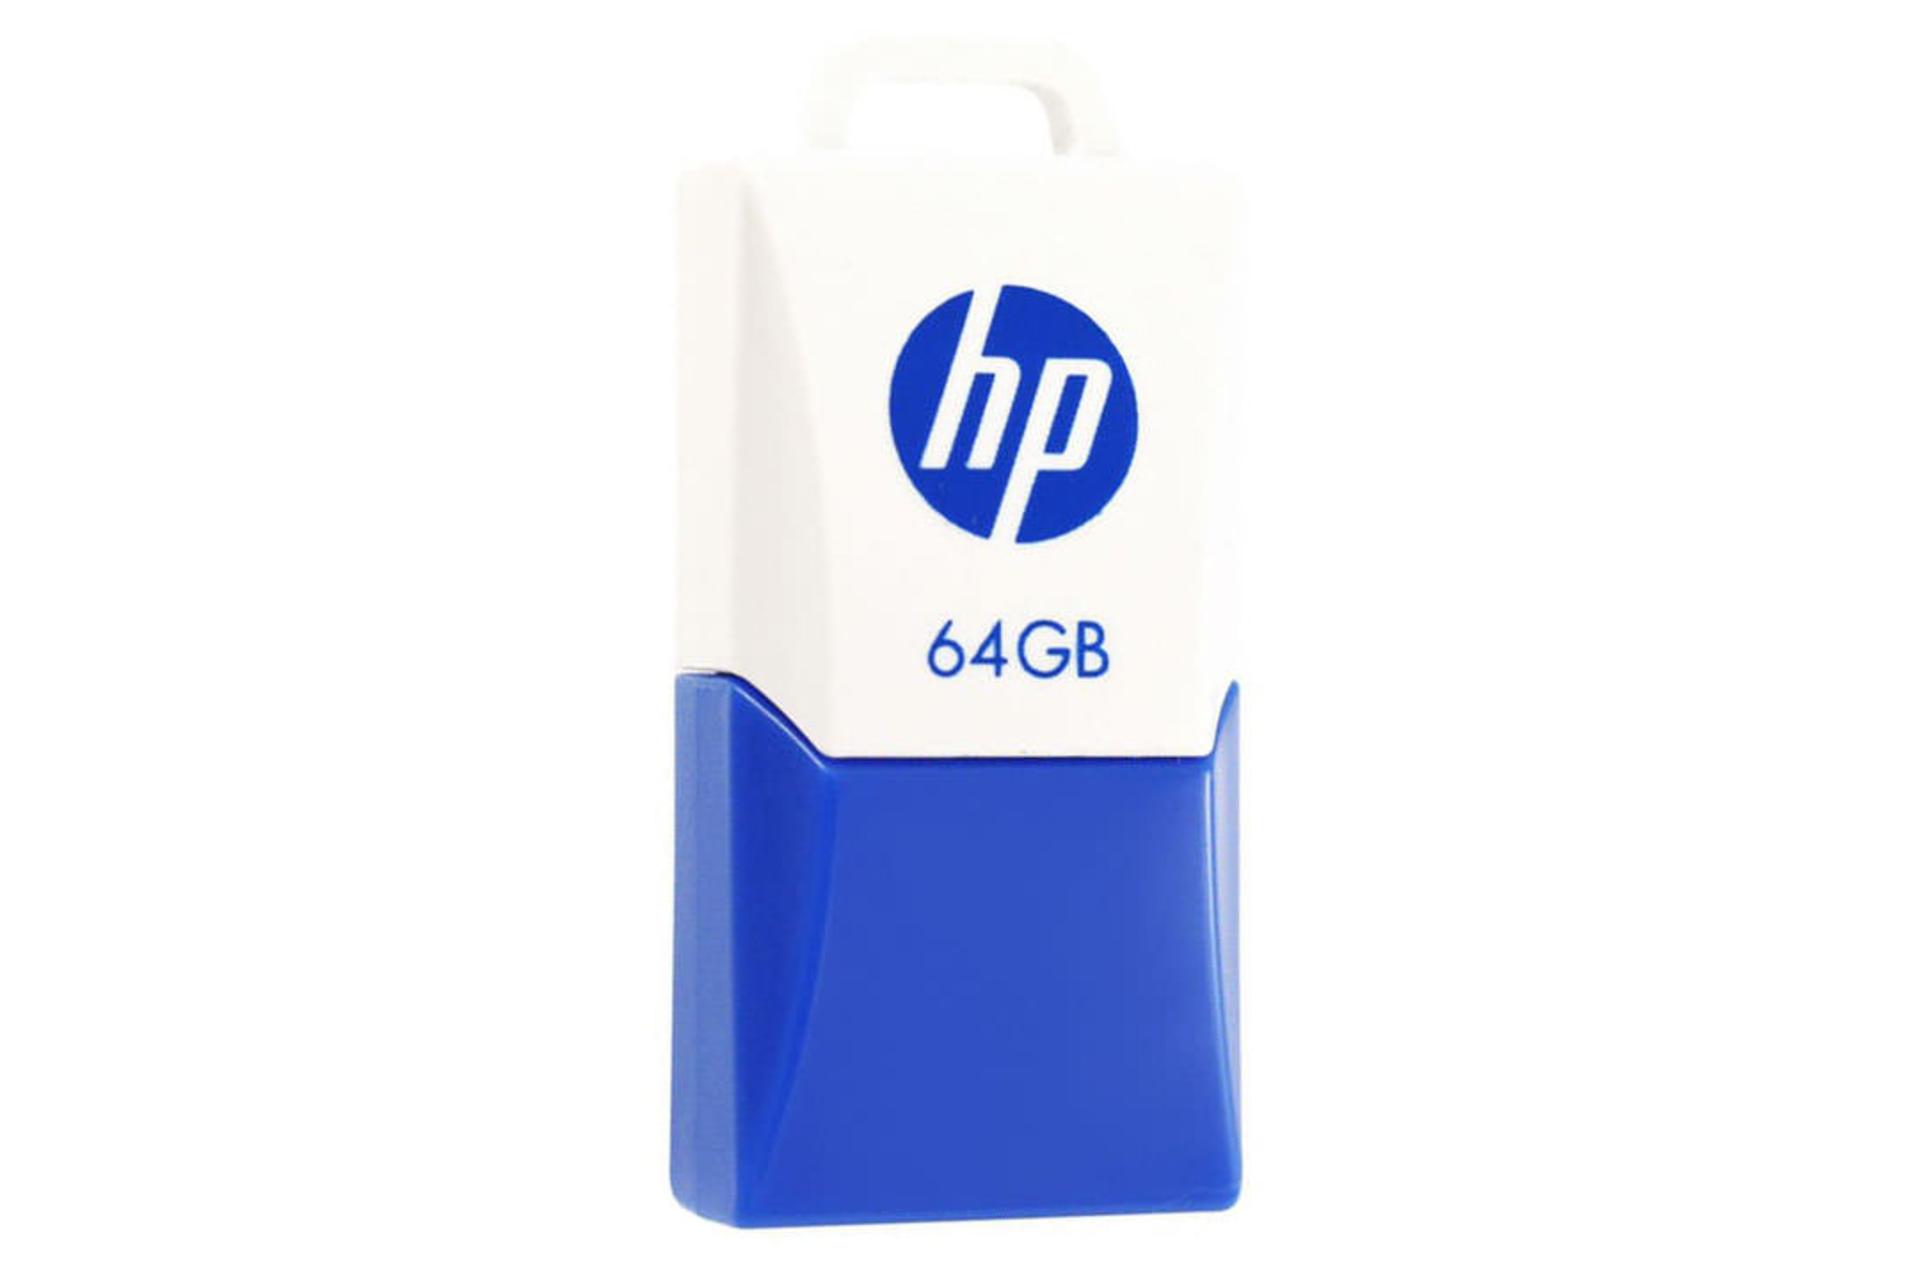 HP v160w 64GB